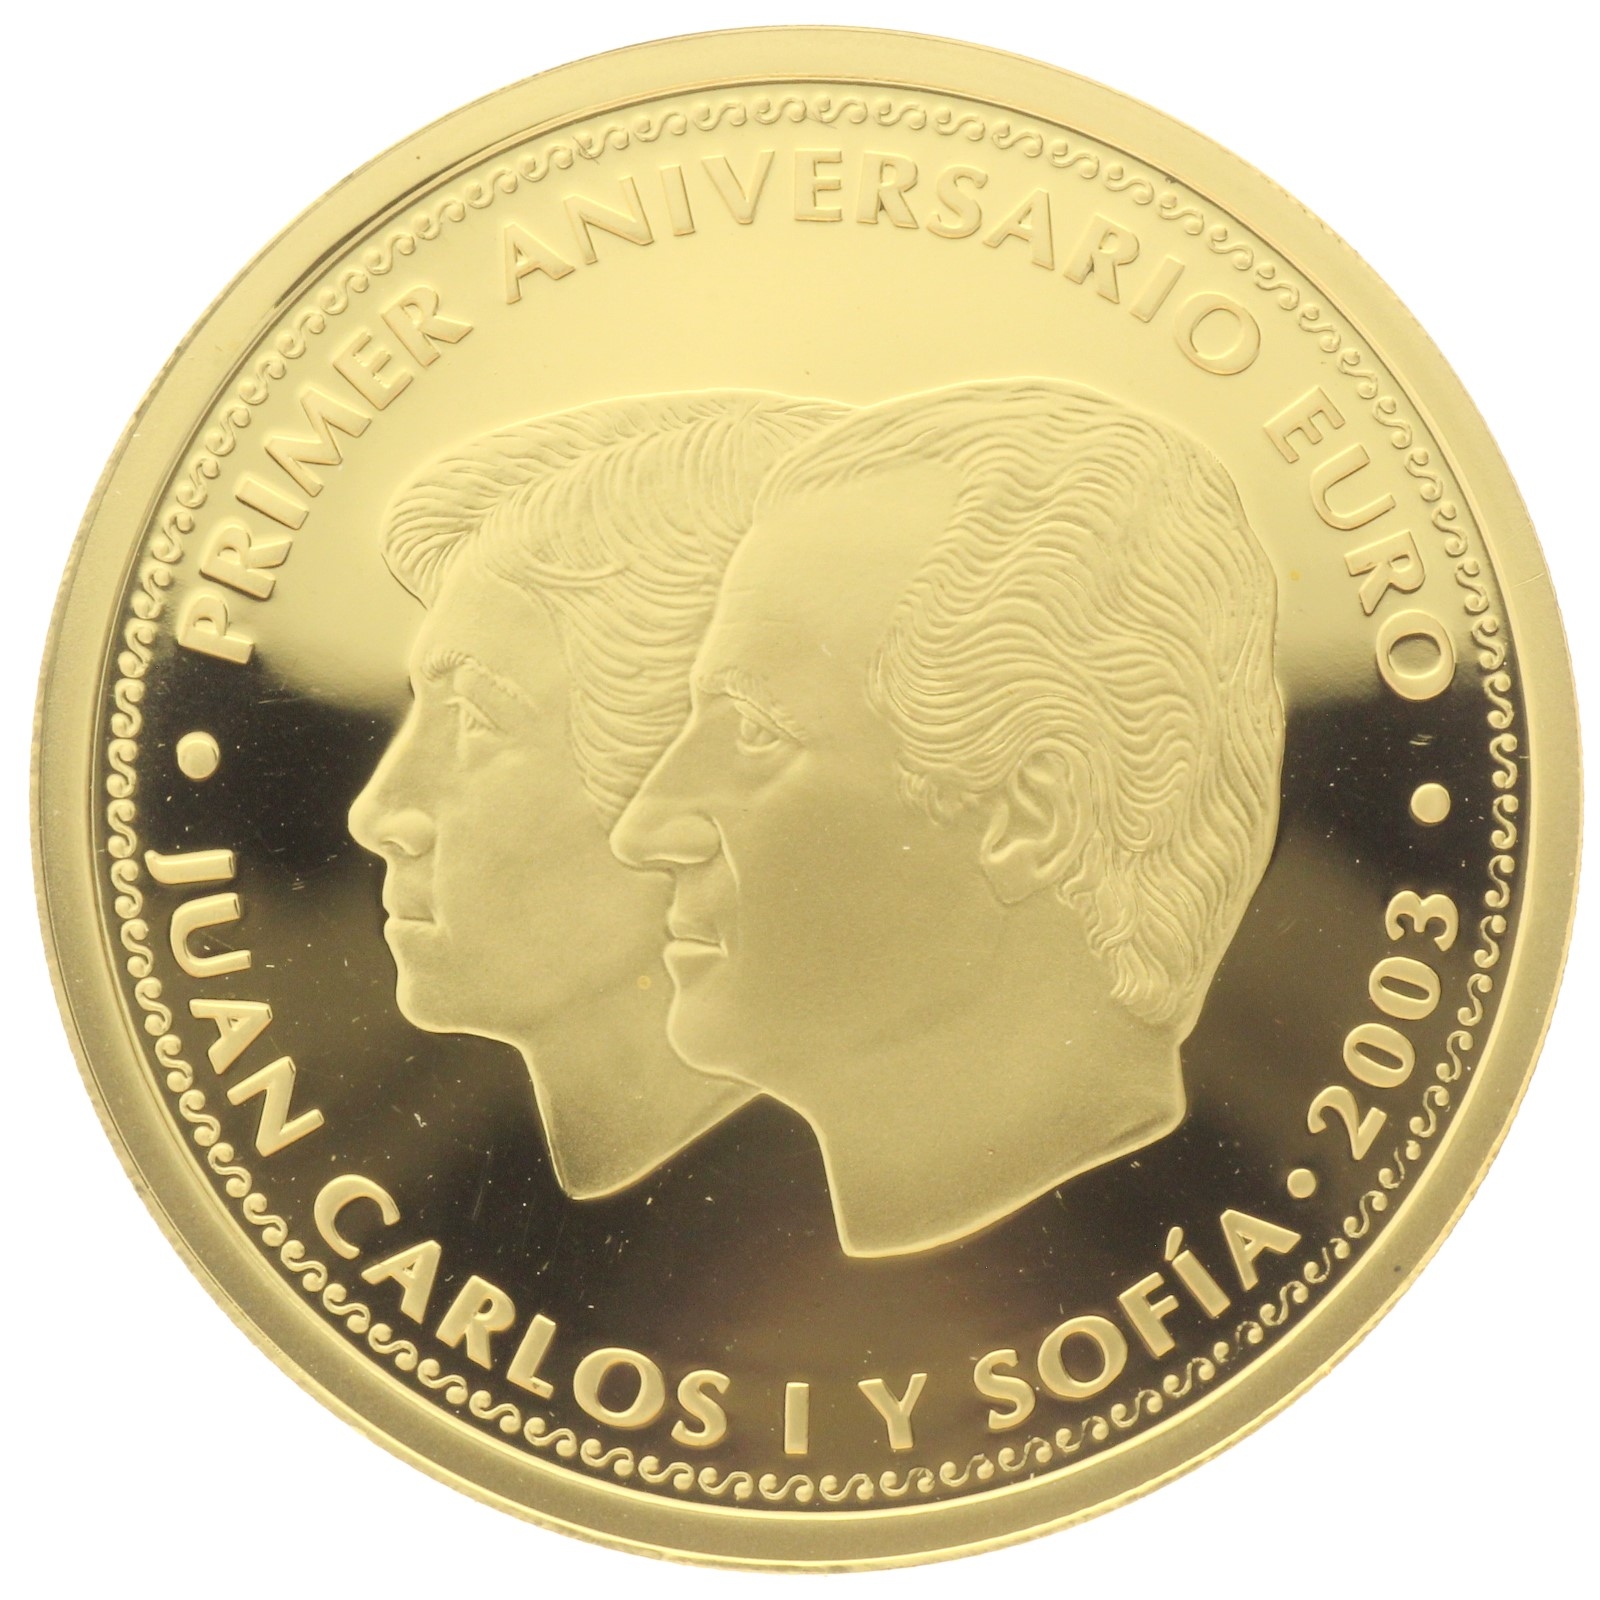 Spain - 200 Euro - 2003 - Juan Carlos I - Euro Introduction